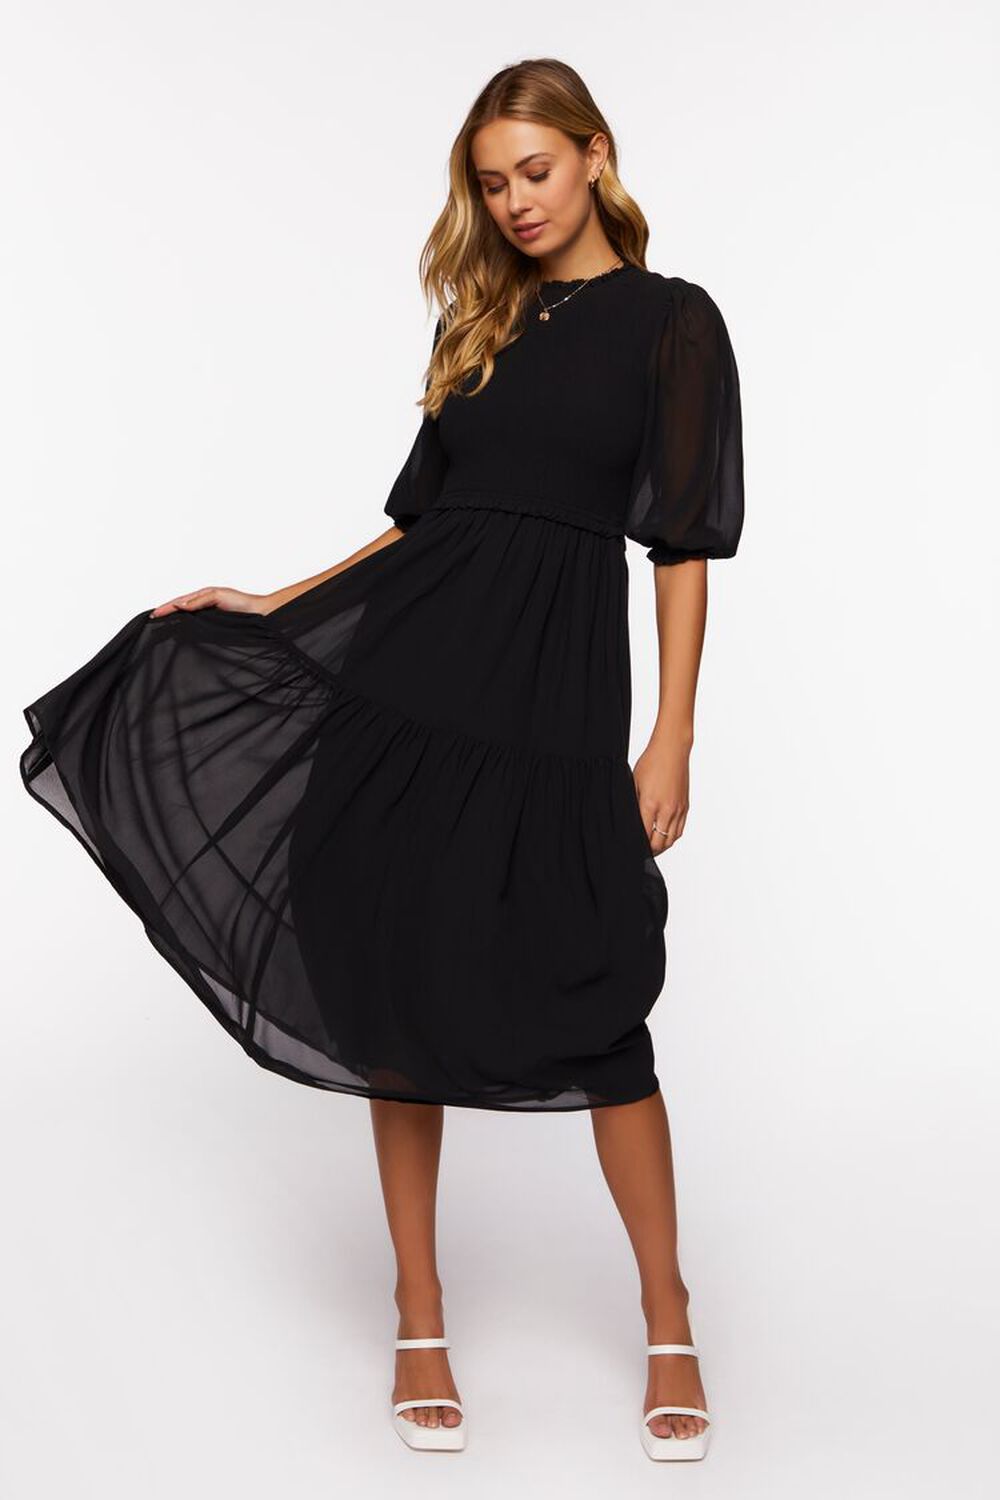 BLACK Smocked Chiffon Peasant-Sleeve Dress, image 1